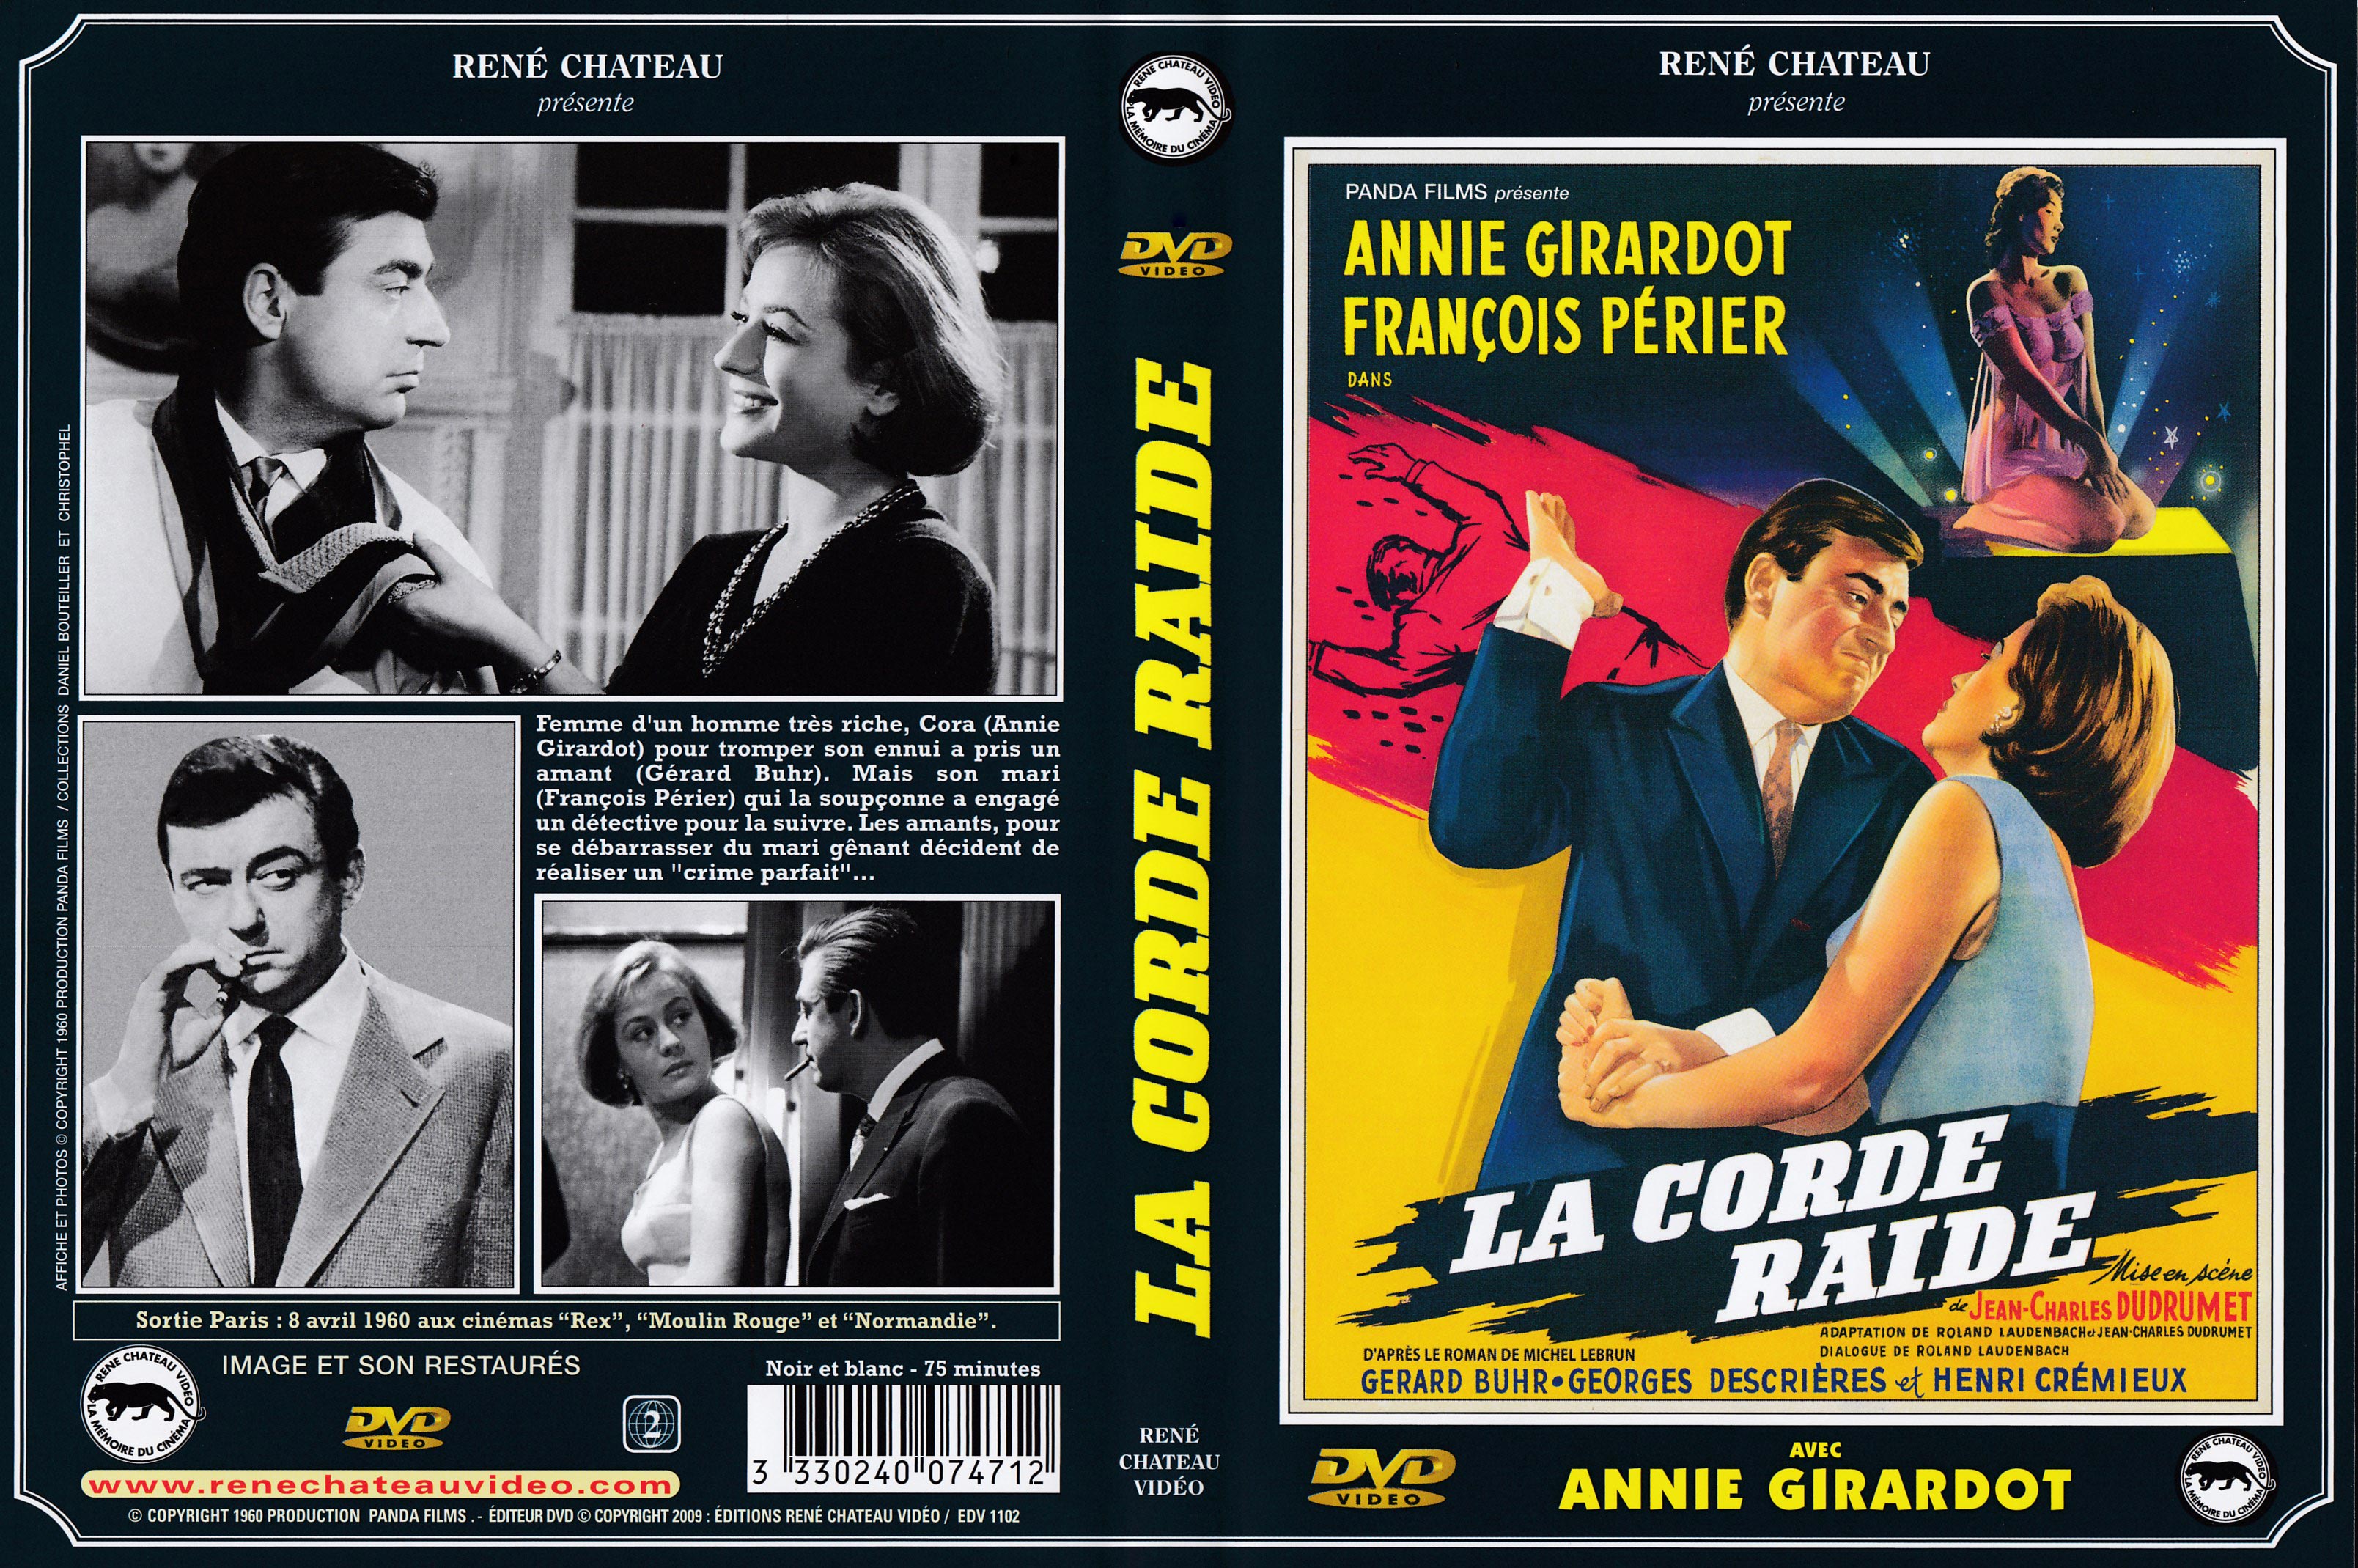 Jaquette DVD La corde raide (1960)